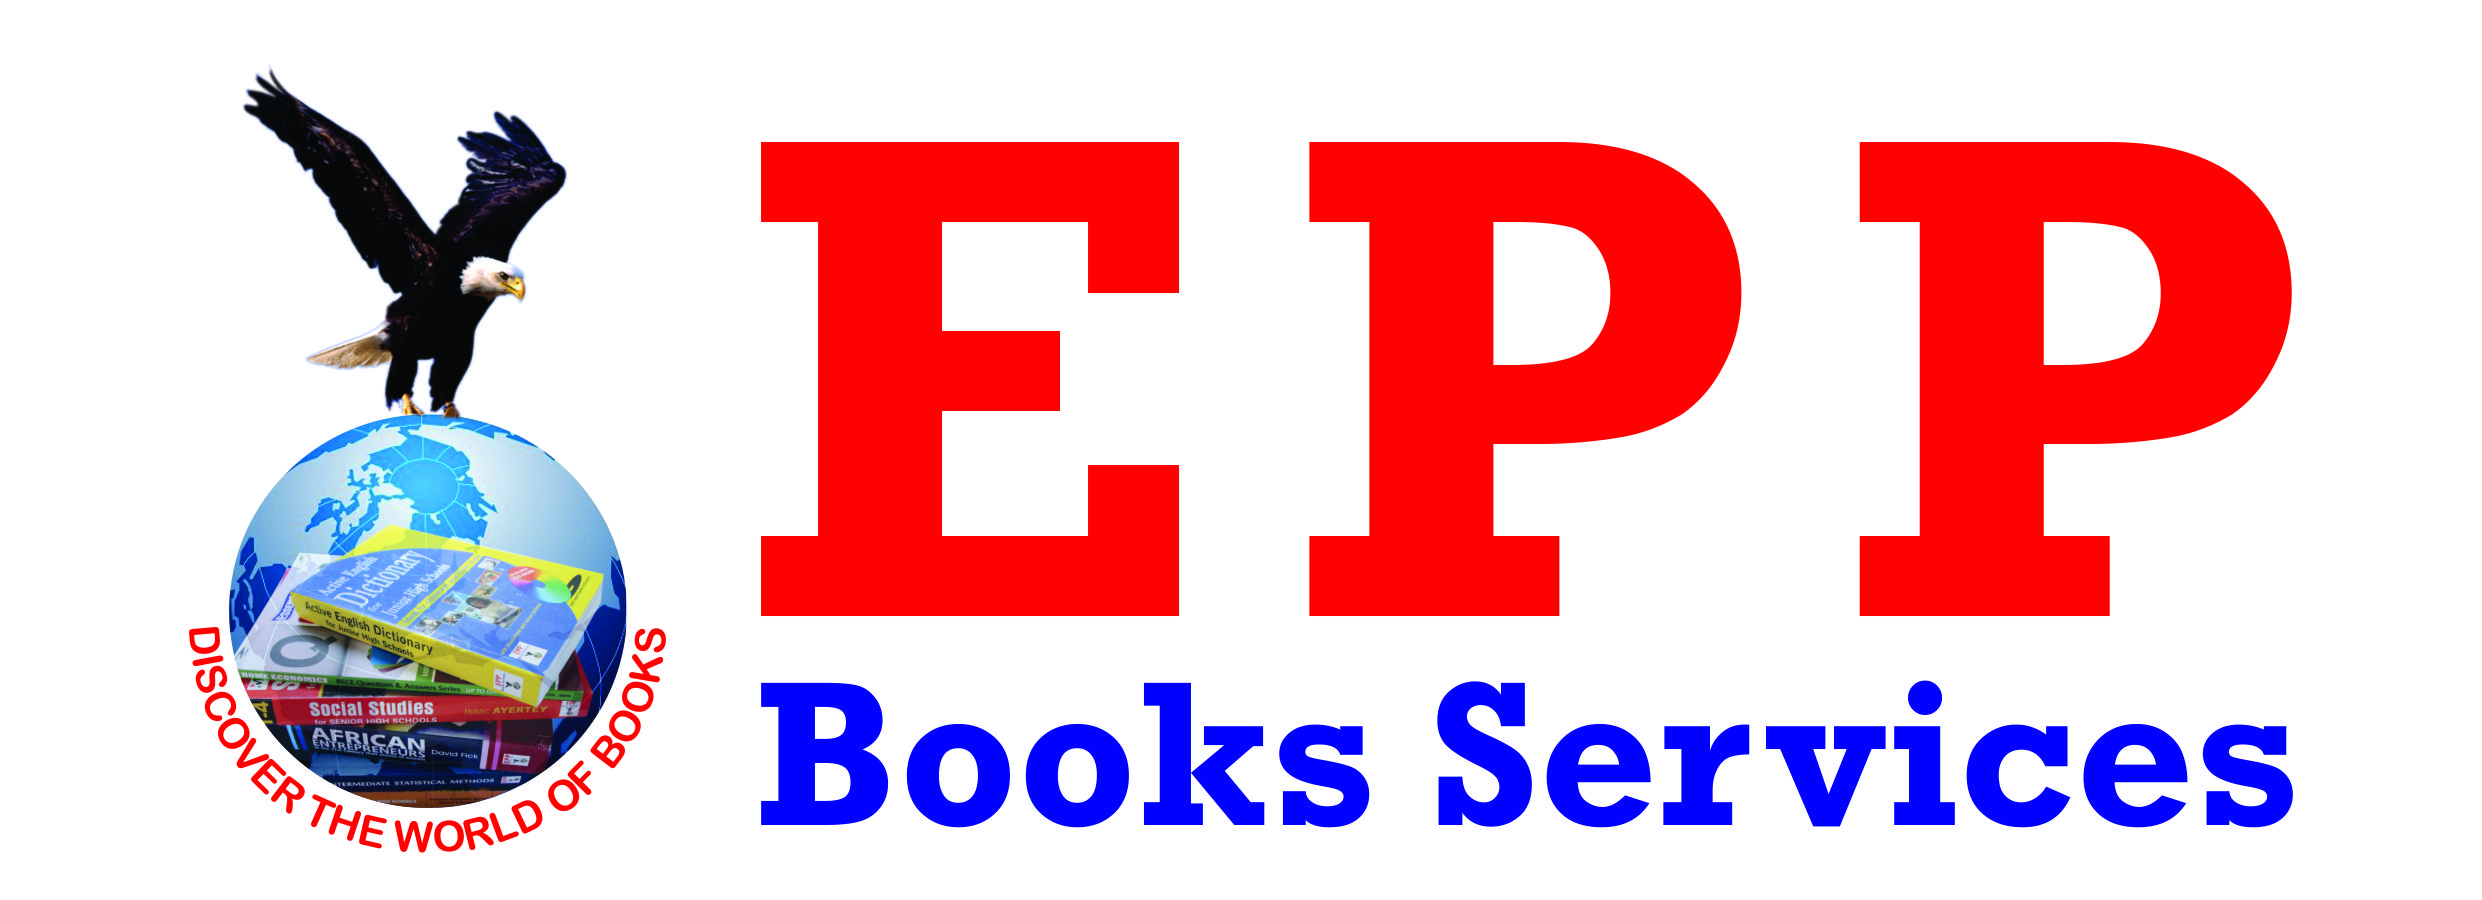 EPP Books services logo